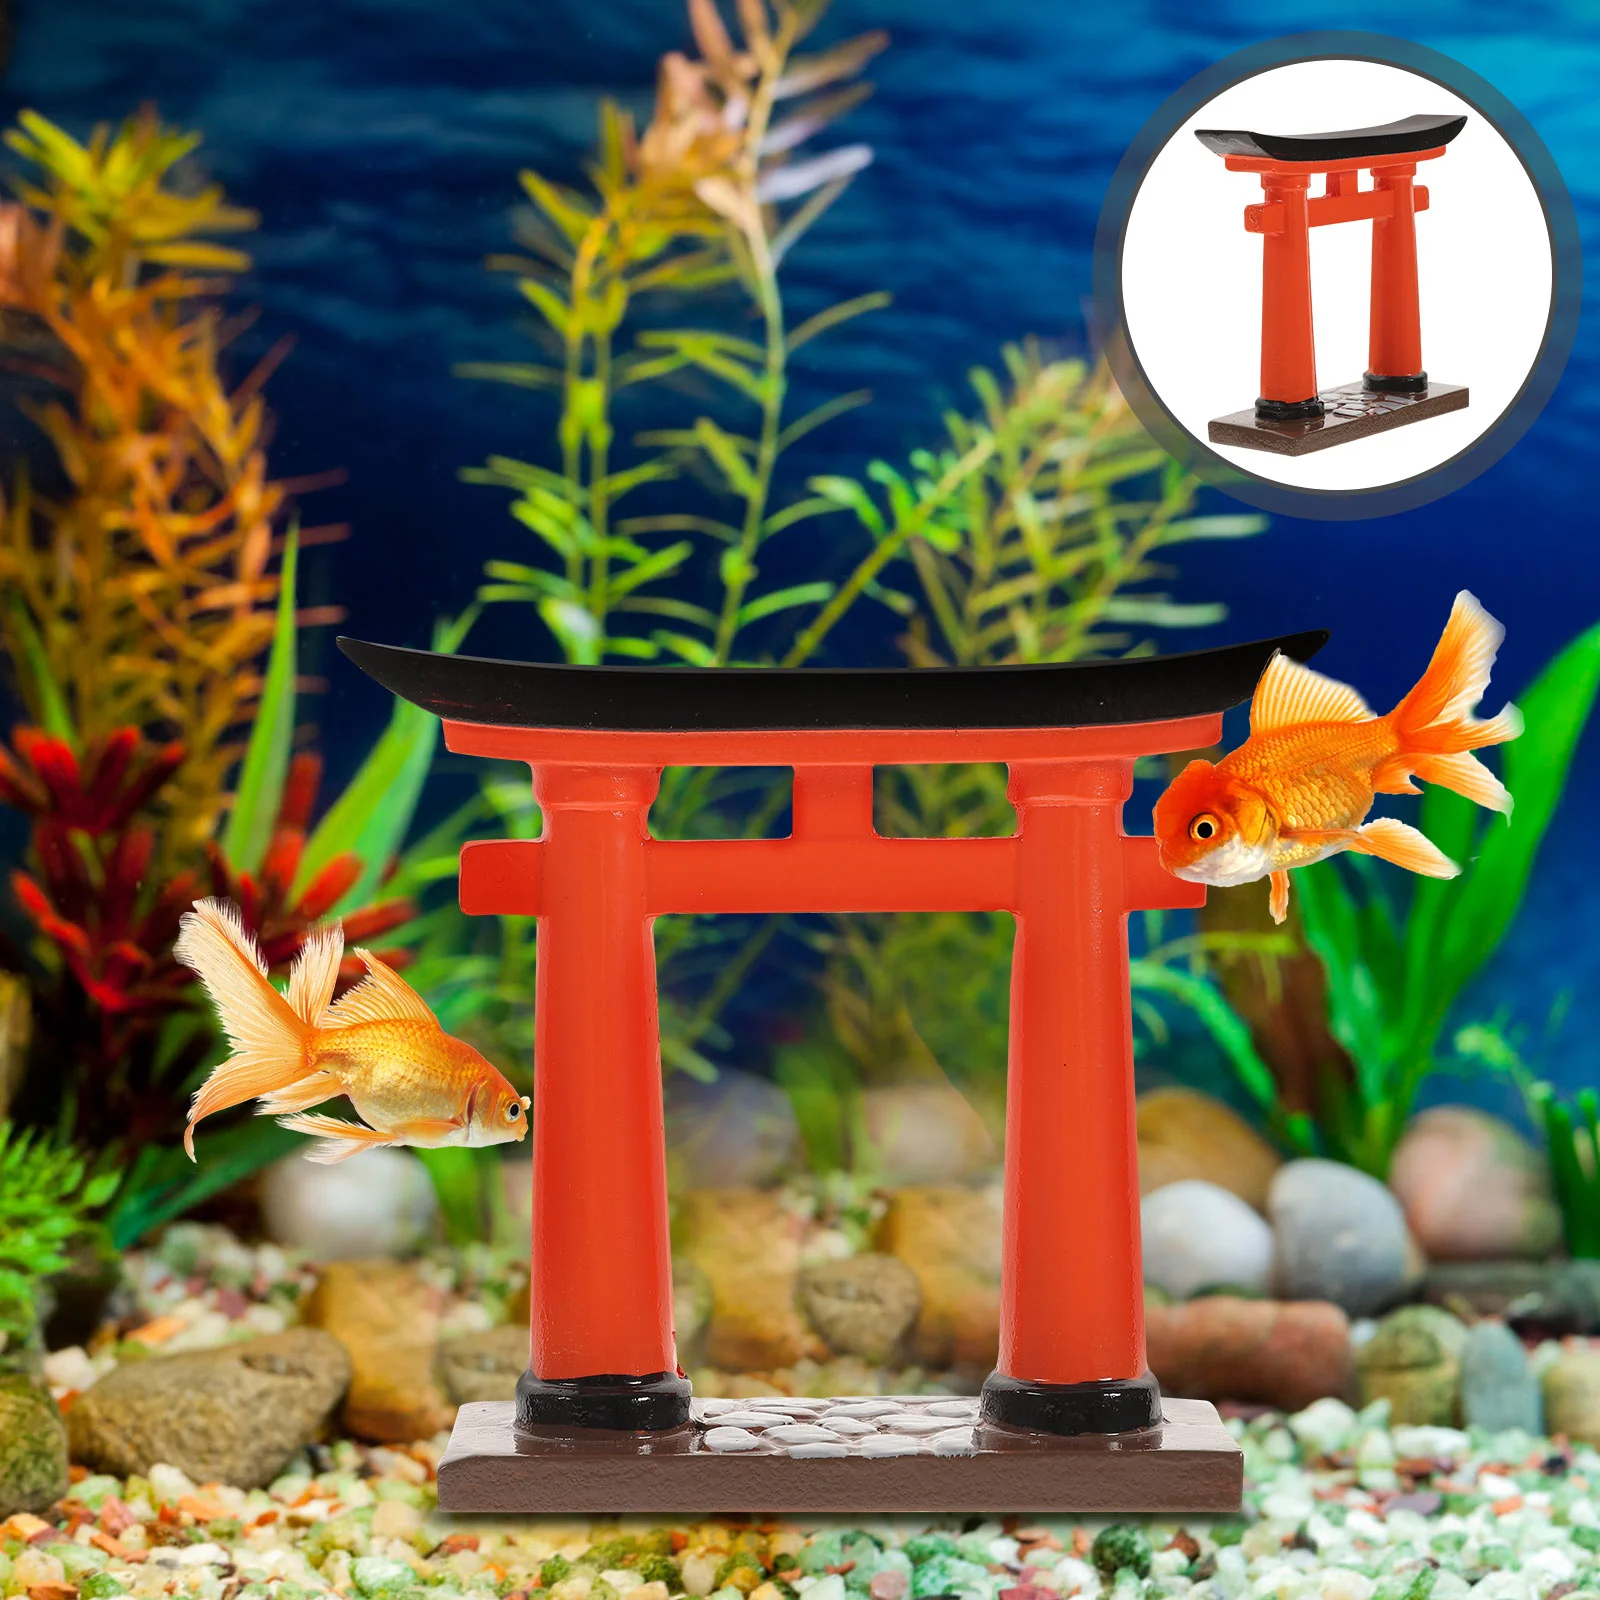 

Japanese Torii Gate Garden Miniatures Crafts Fish Tank Decor Aquarium Ornaments Micro Decors Scene Decorations Resin